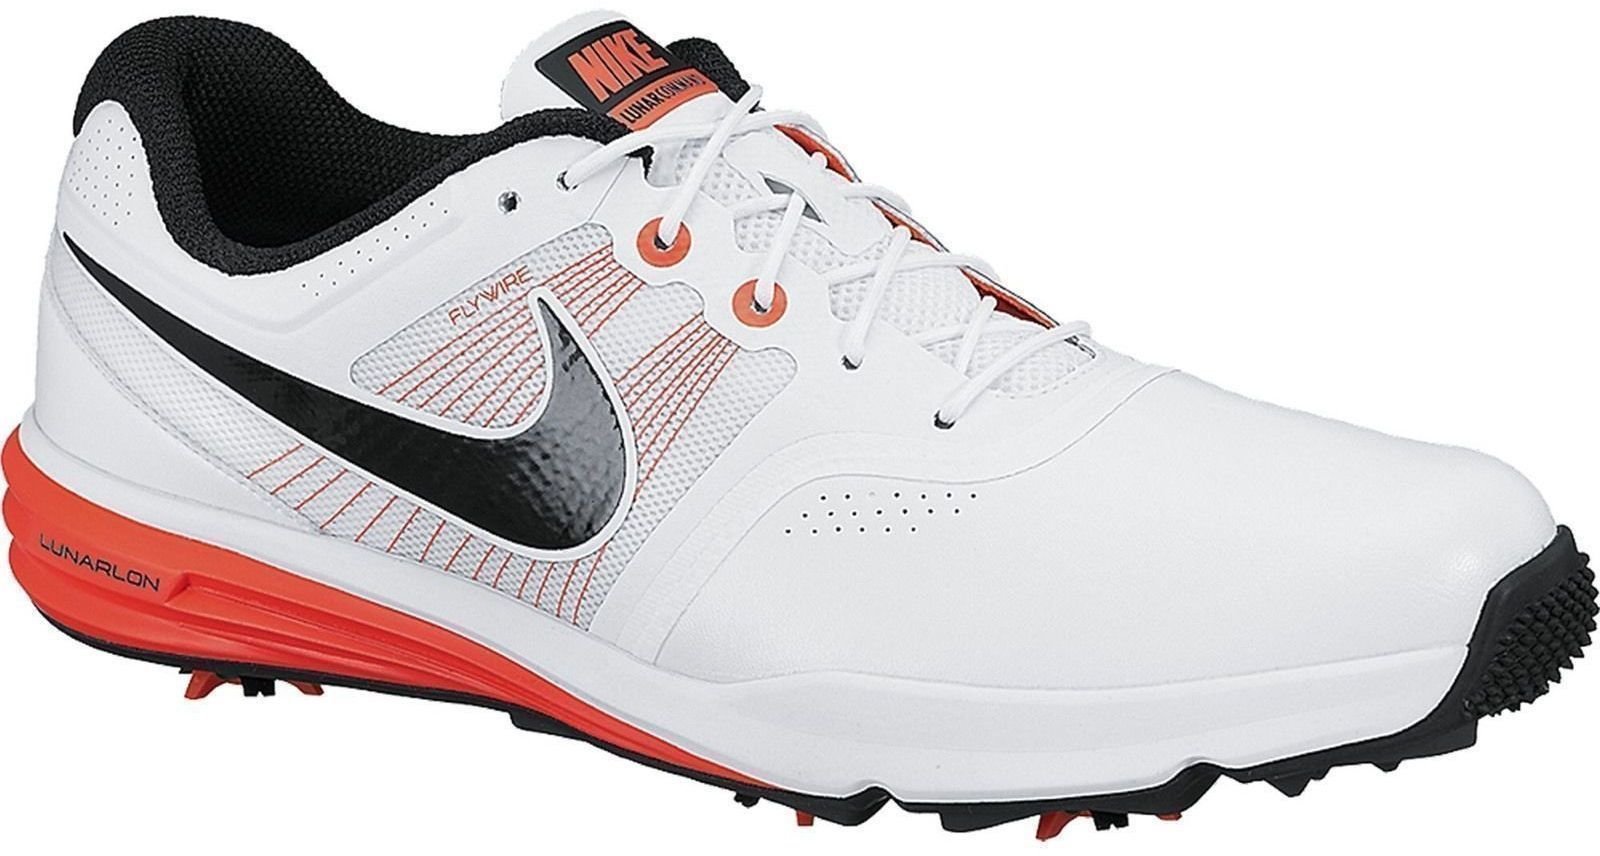 Men's golf shoes Nike Lunar Command Mens Golf Shoes White/Black/Crimson US 11